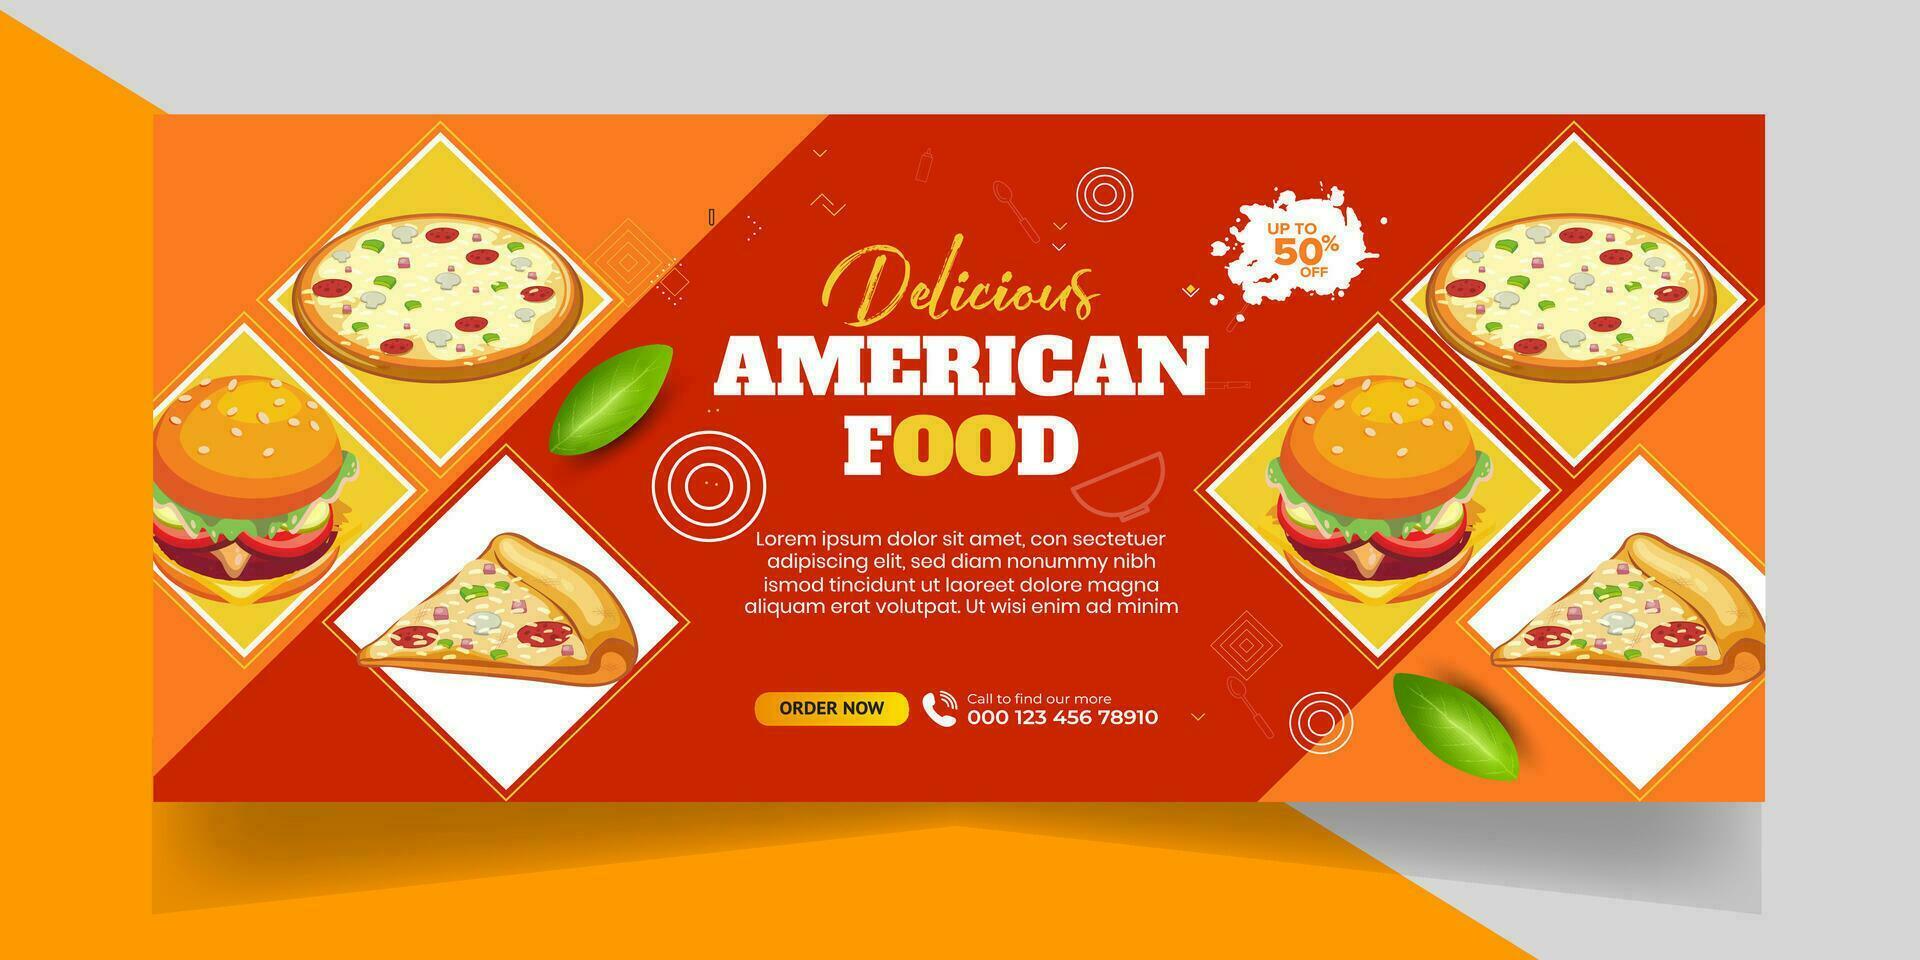 delicioso rápido comida Pizza bandera con social medios de comunicación enviar modelo bandera, restaurante descuento comida hamburguesa bandera diseño, comida menú social medios de comunicación cubrir modelo. vector